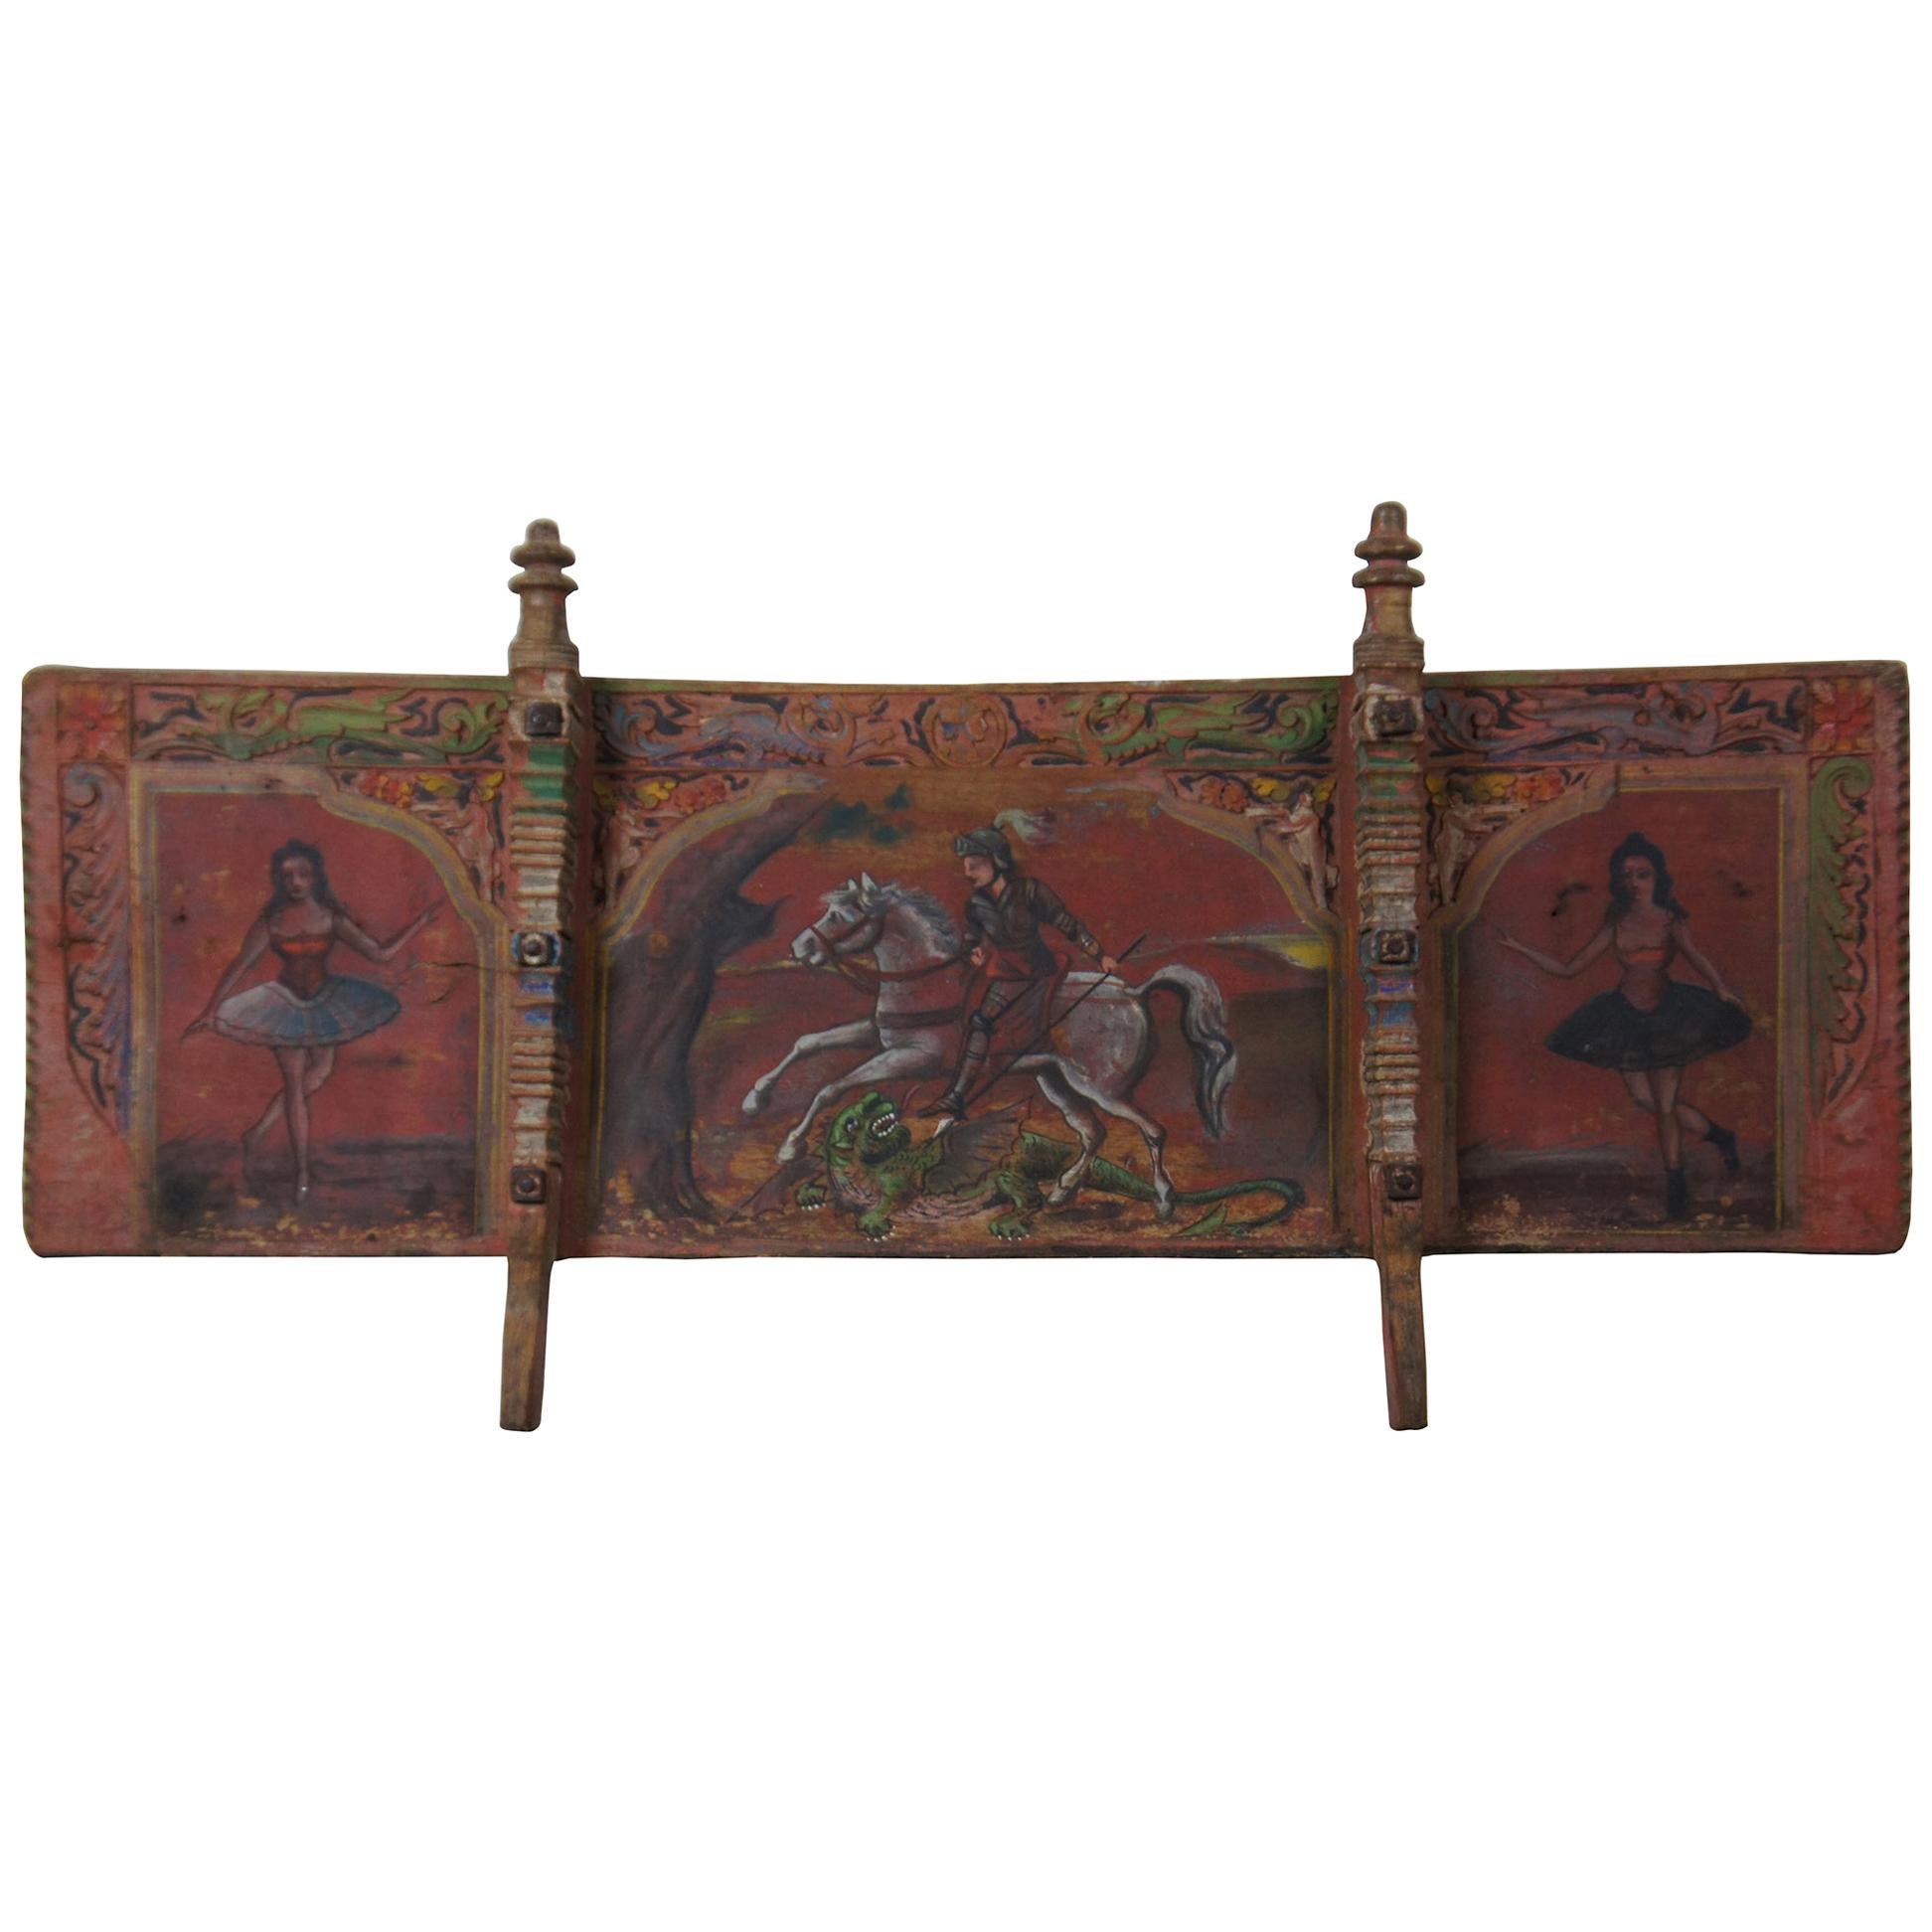 Antique Italian Sicilian Carretto Folk Art Painted Donkey Horse Cart Panel